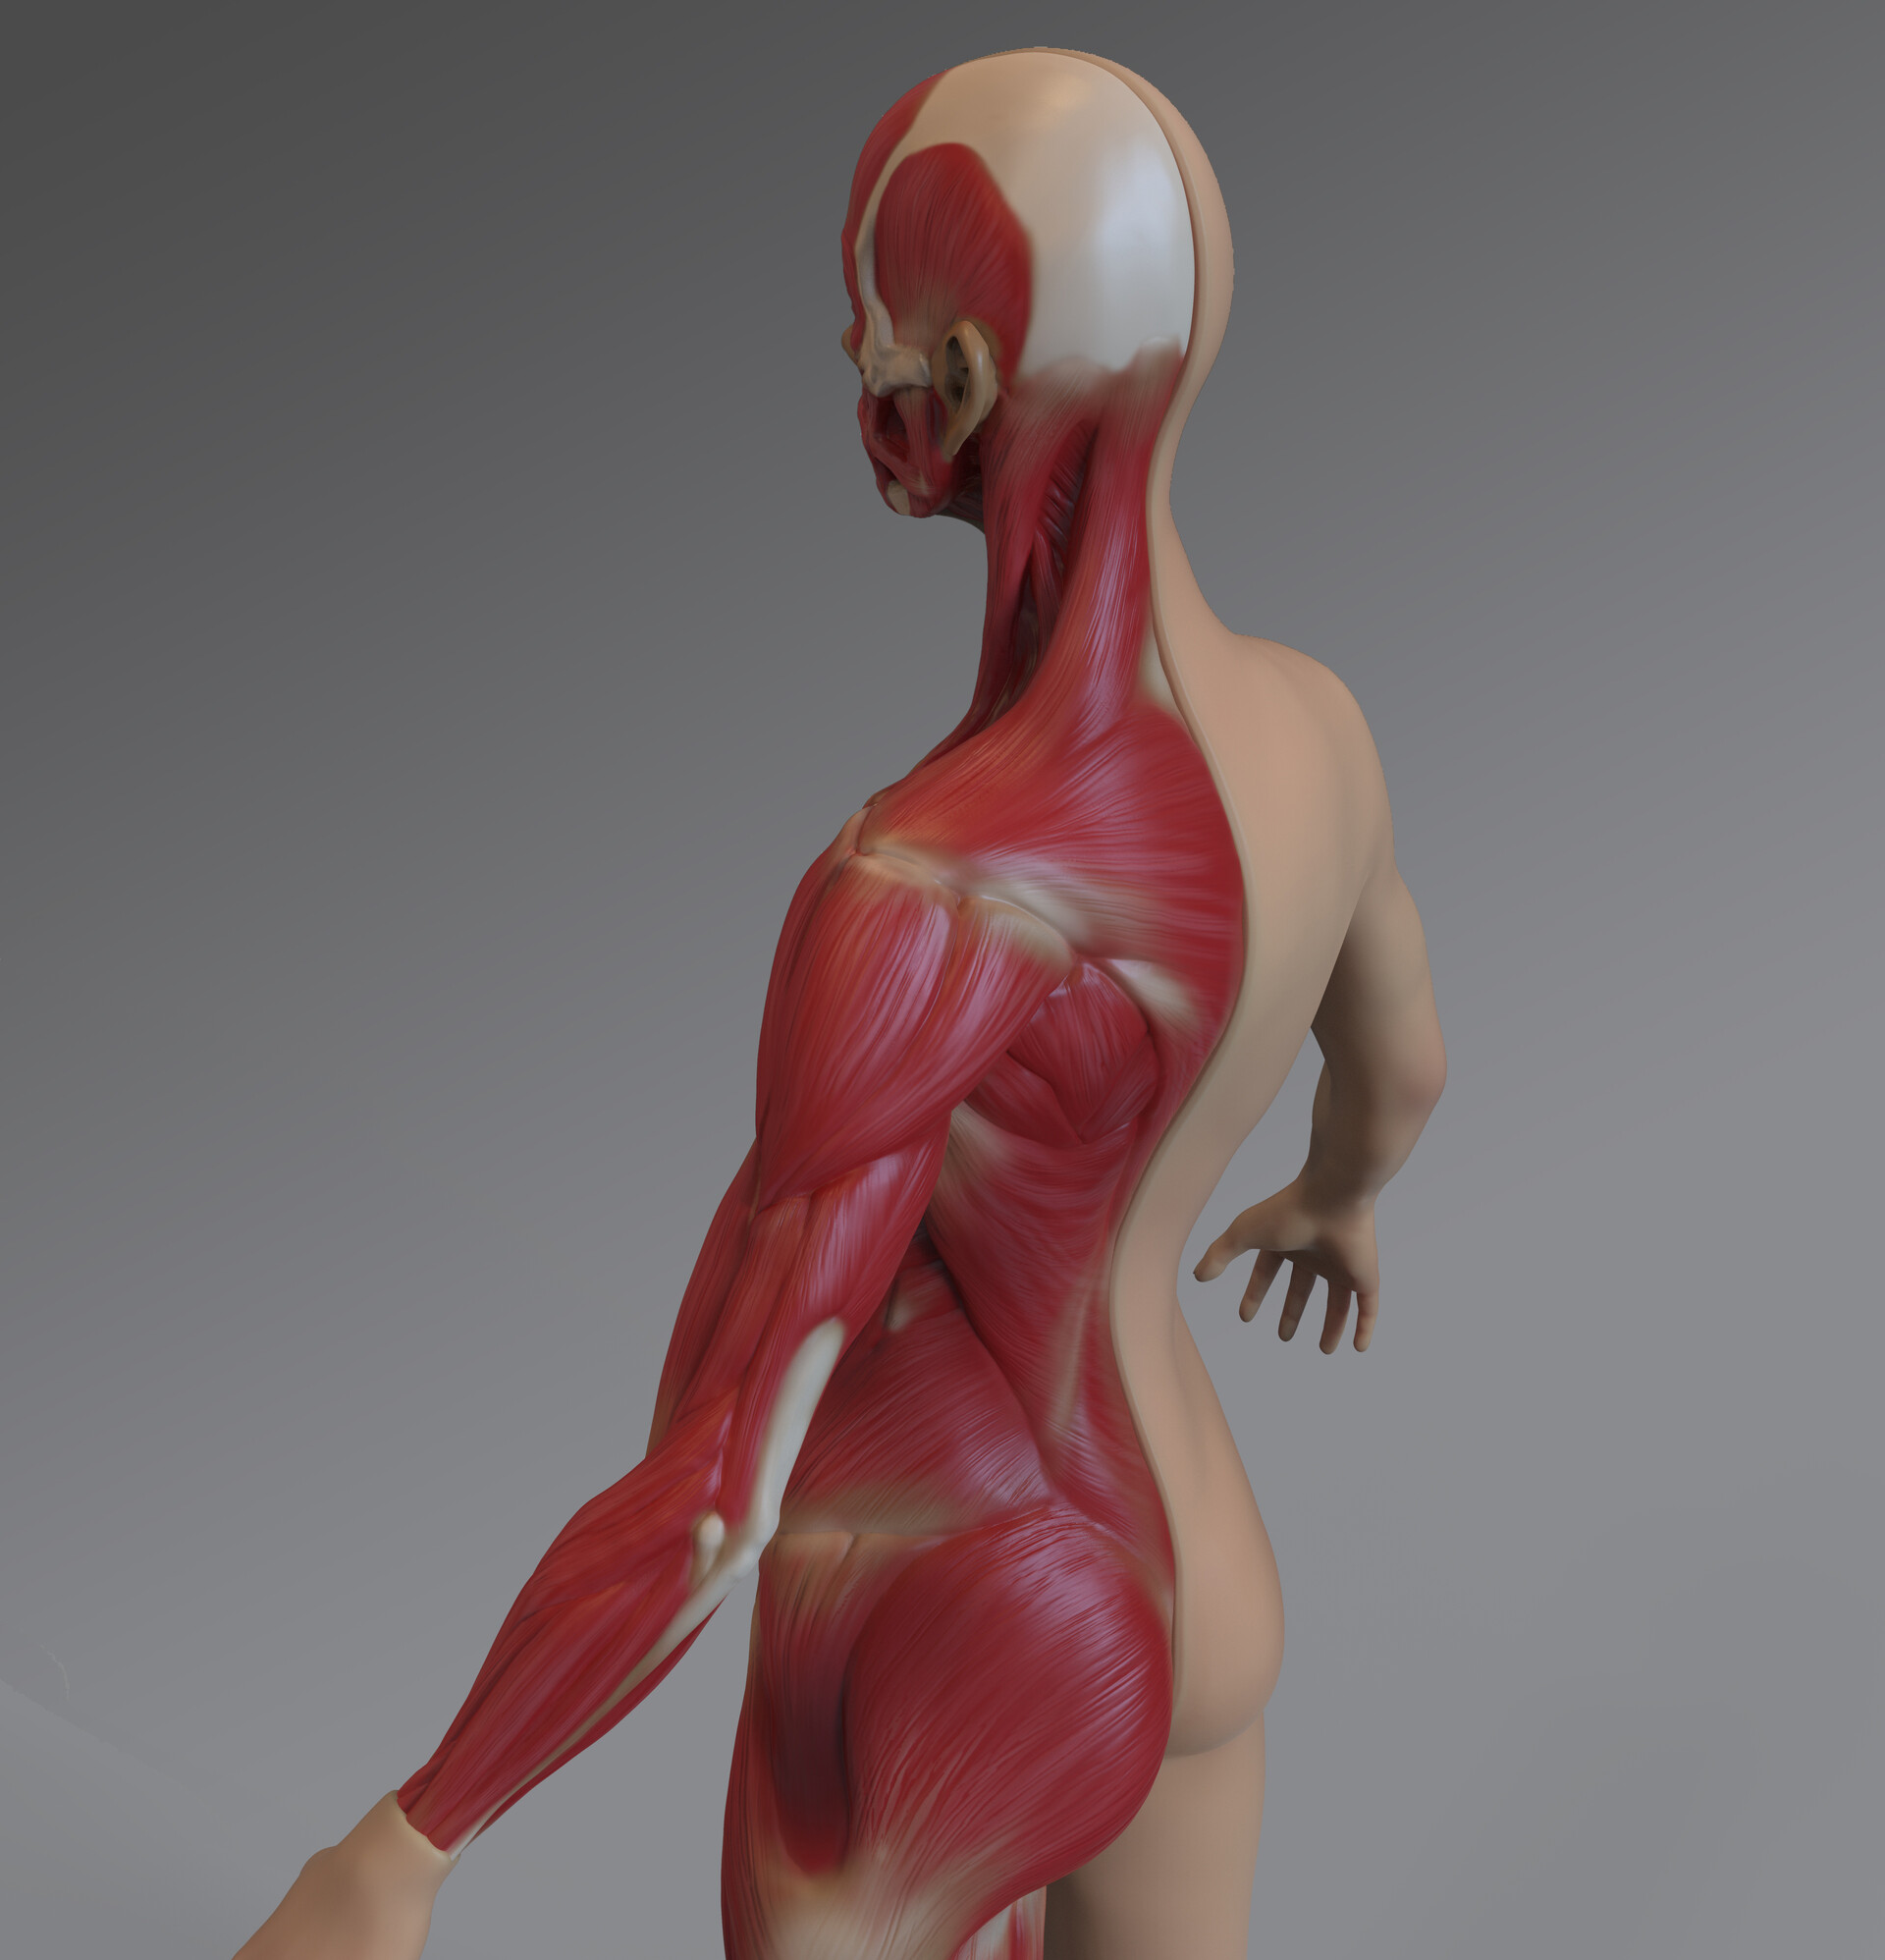 ArtStation - Female Muscular Anatomy - Model